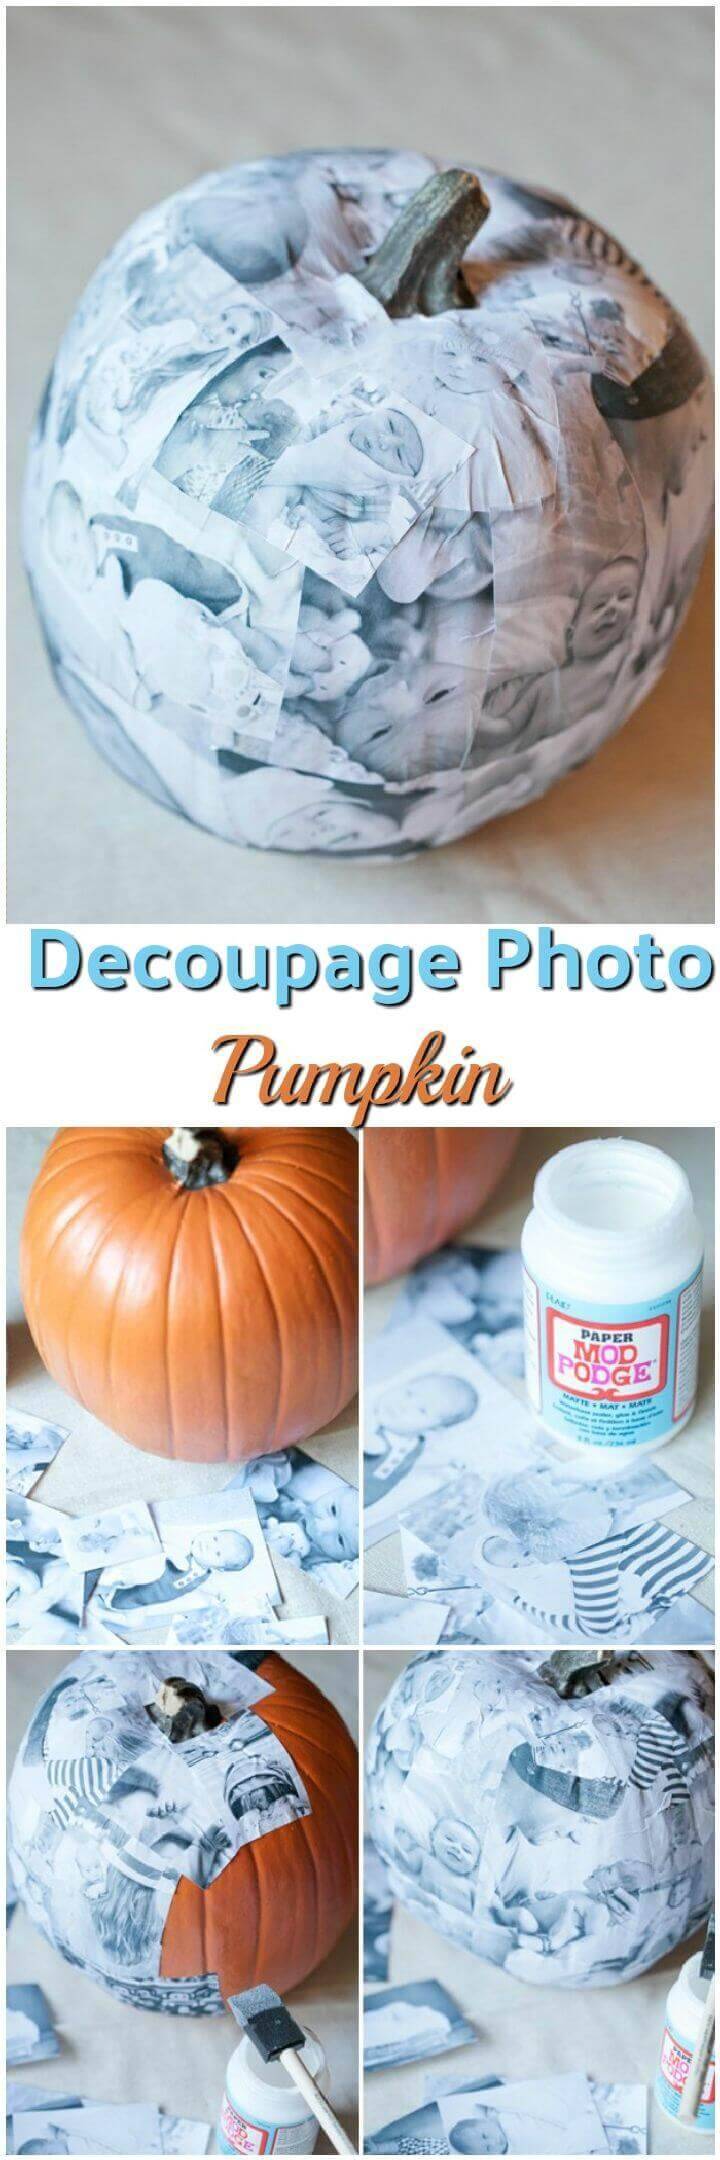 Decoupage Photo Pumpkin